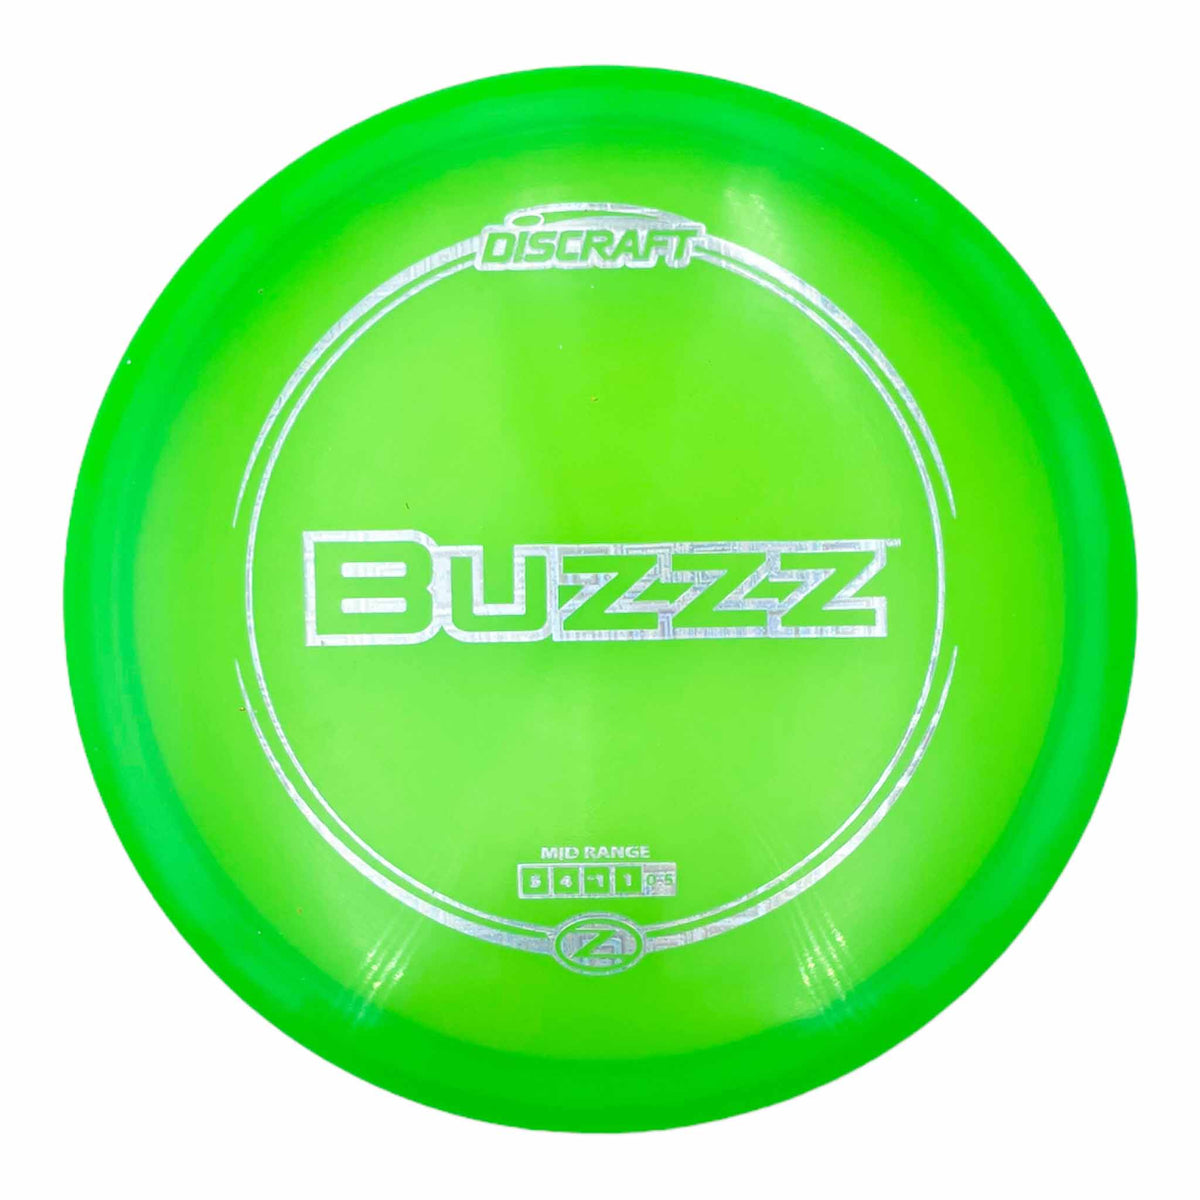 Discraft Z Line Buzzz midrange - Green / Silver